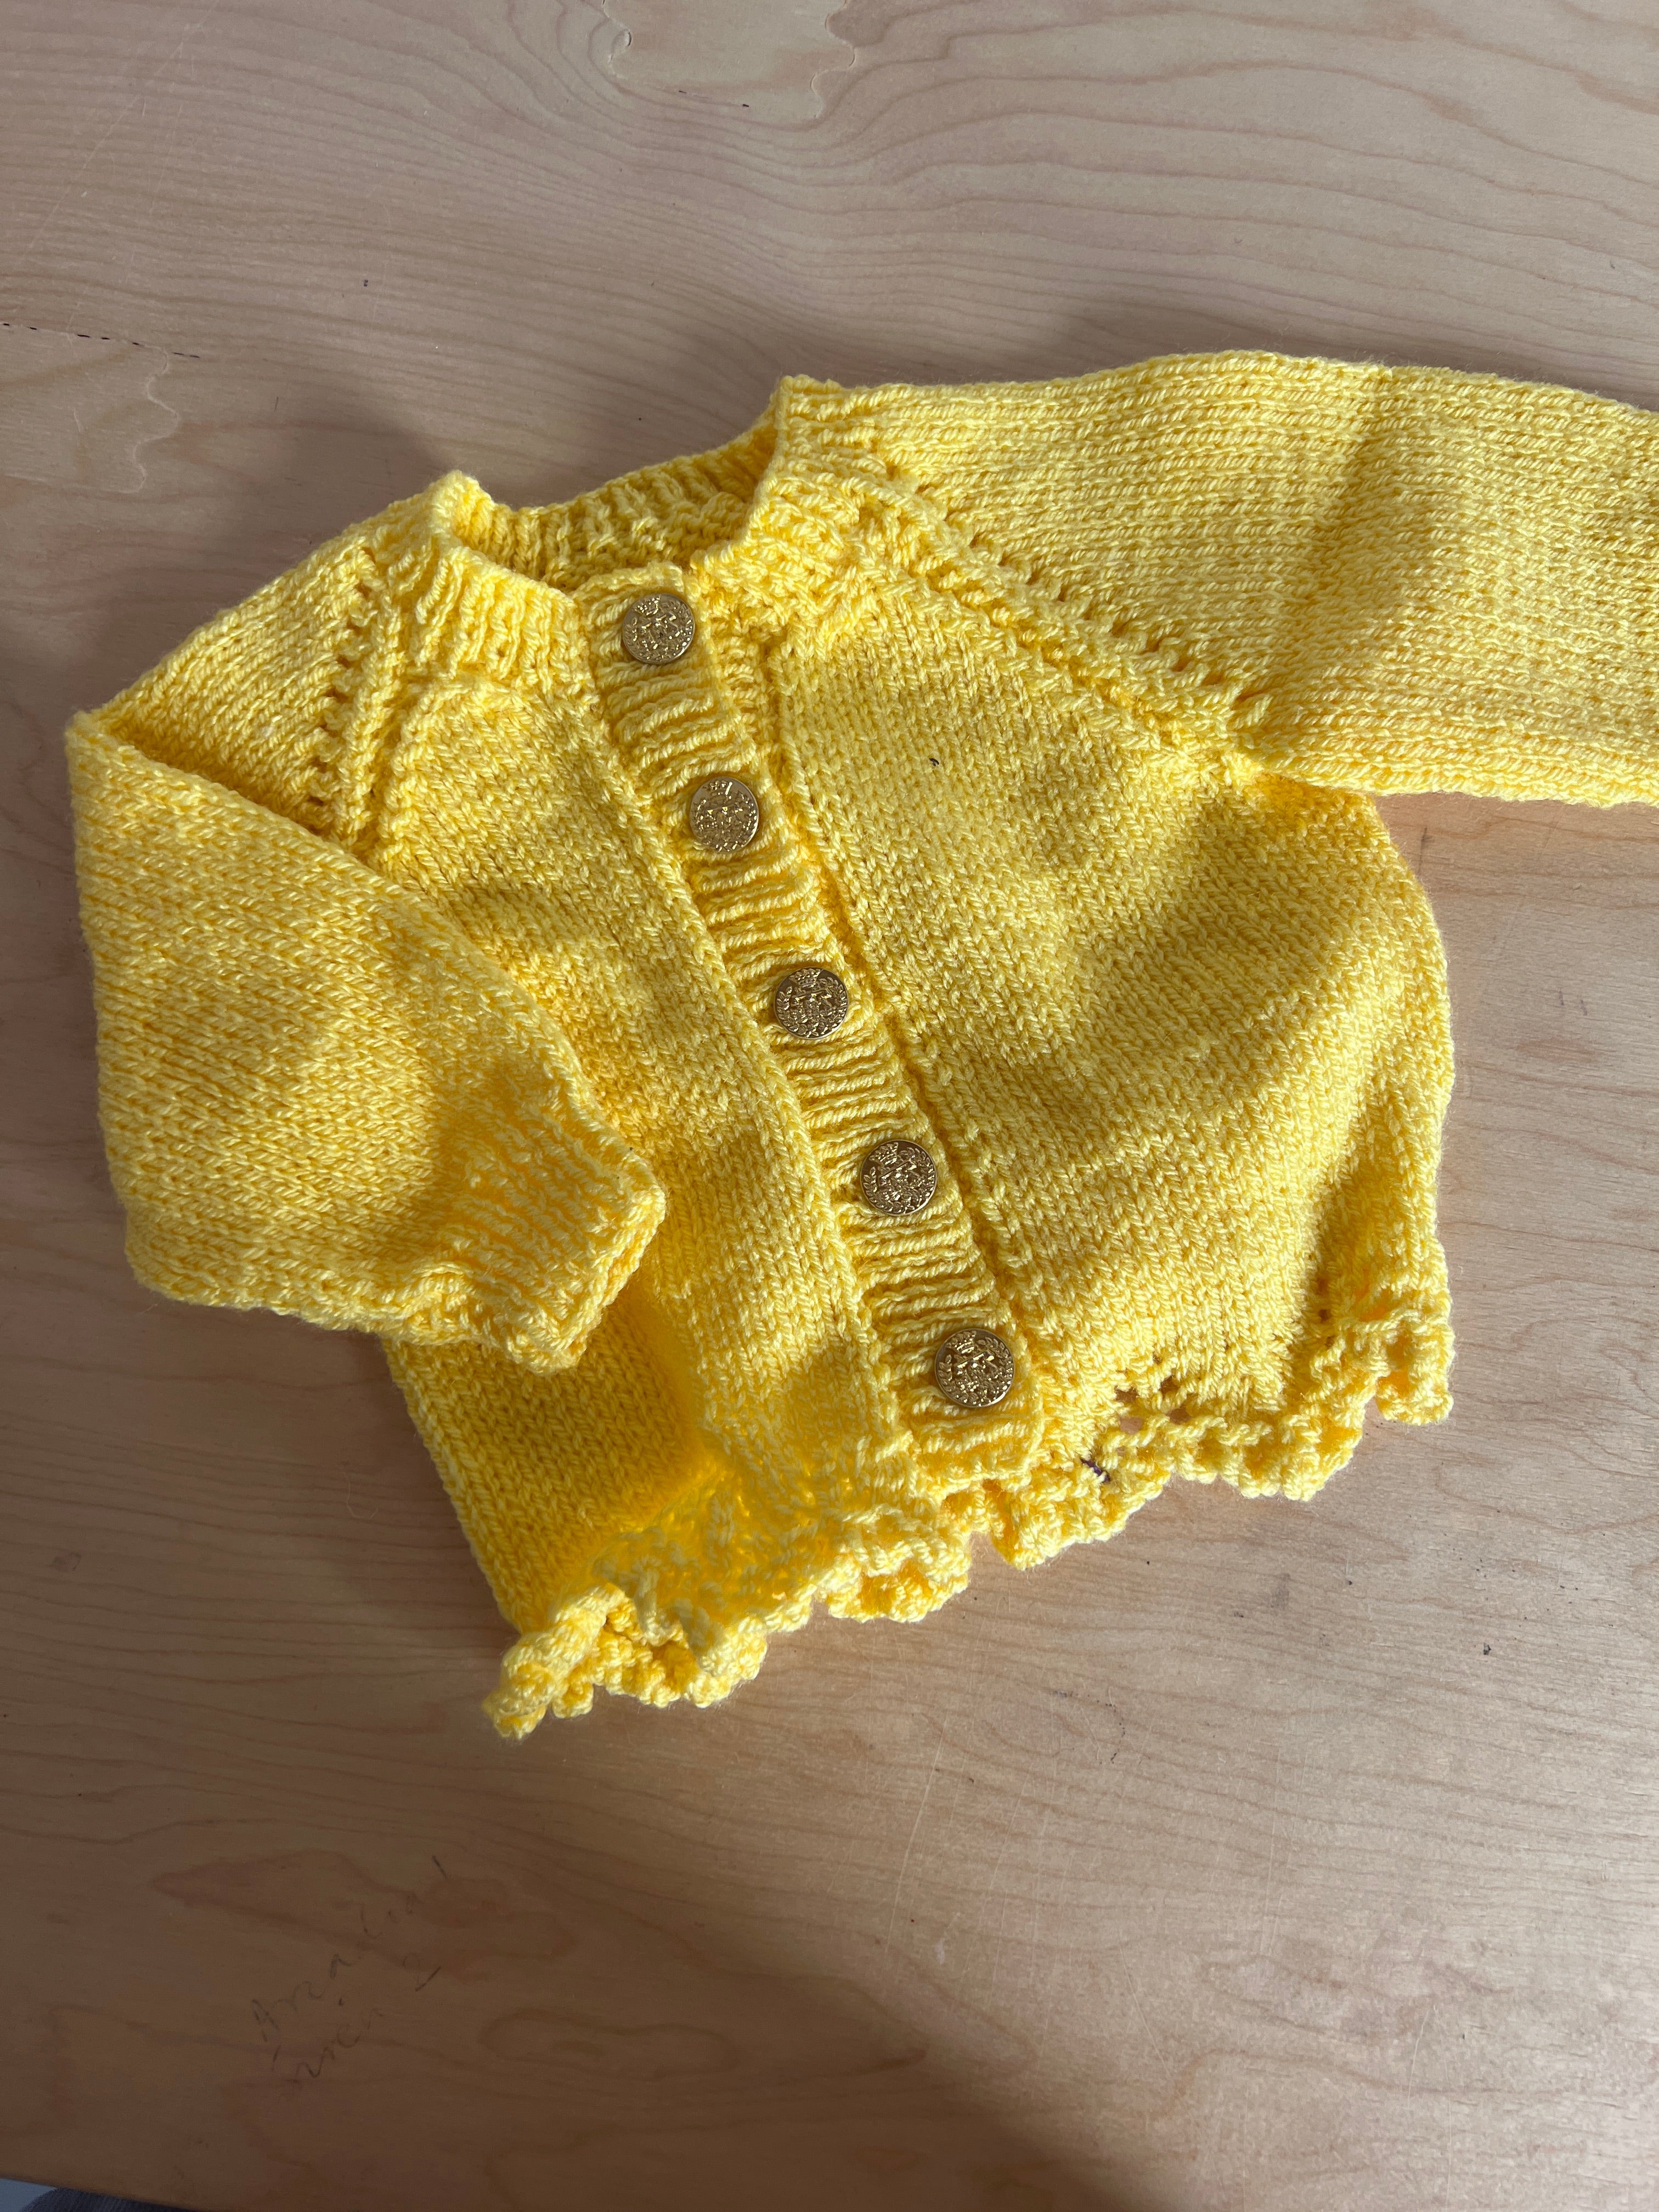 3-6 months | hand knit